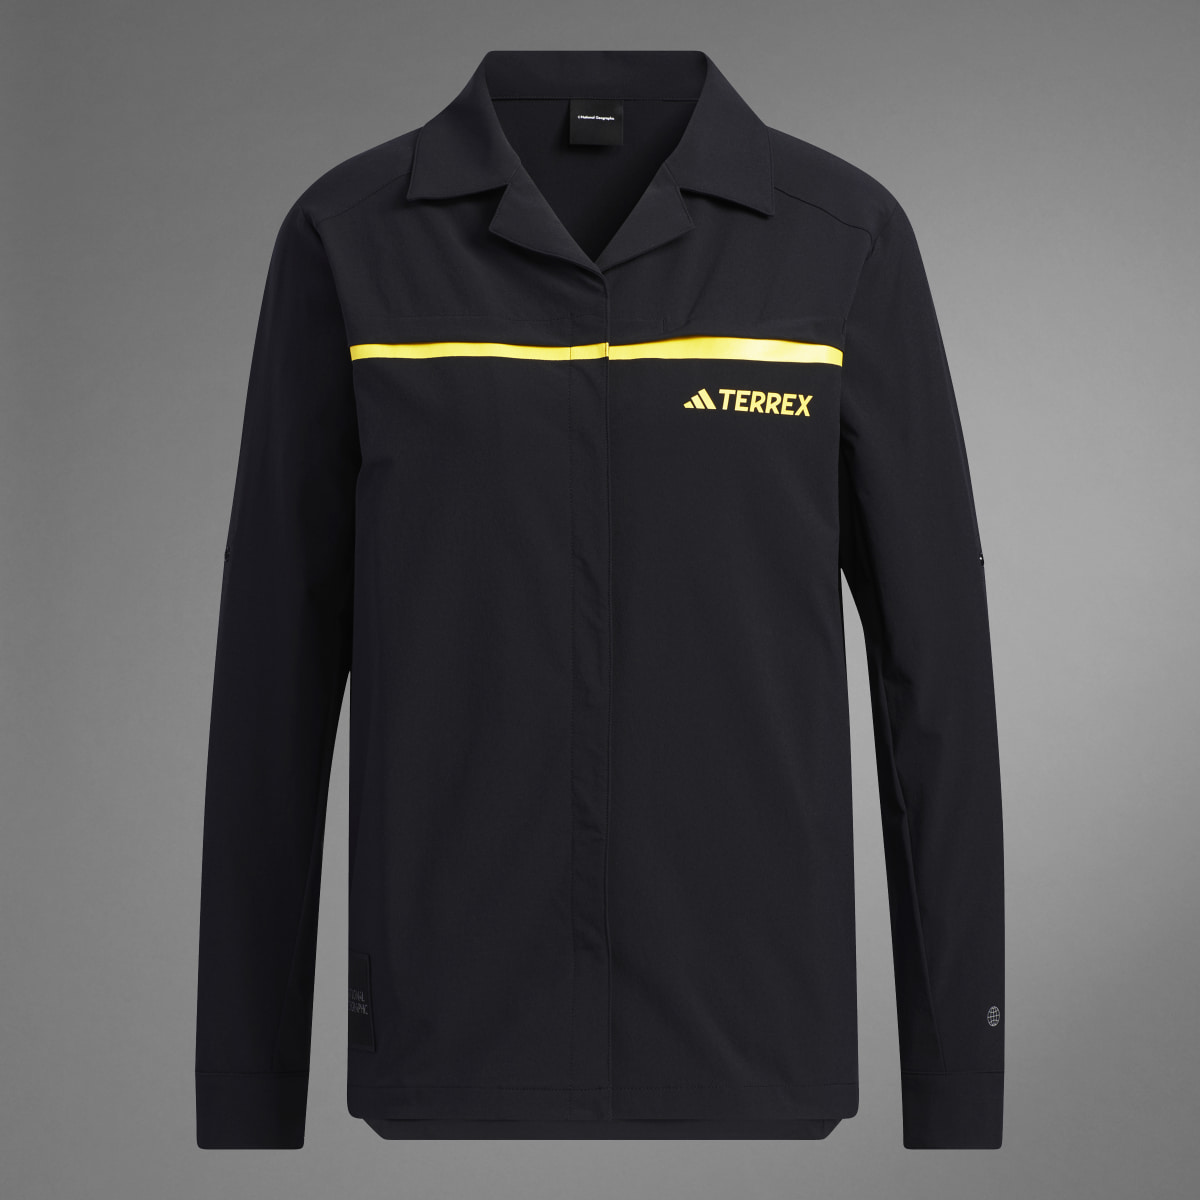 Adidas National Geographic Long Sleeve Shirt. 10